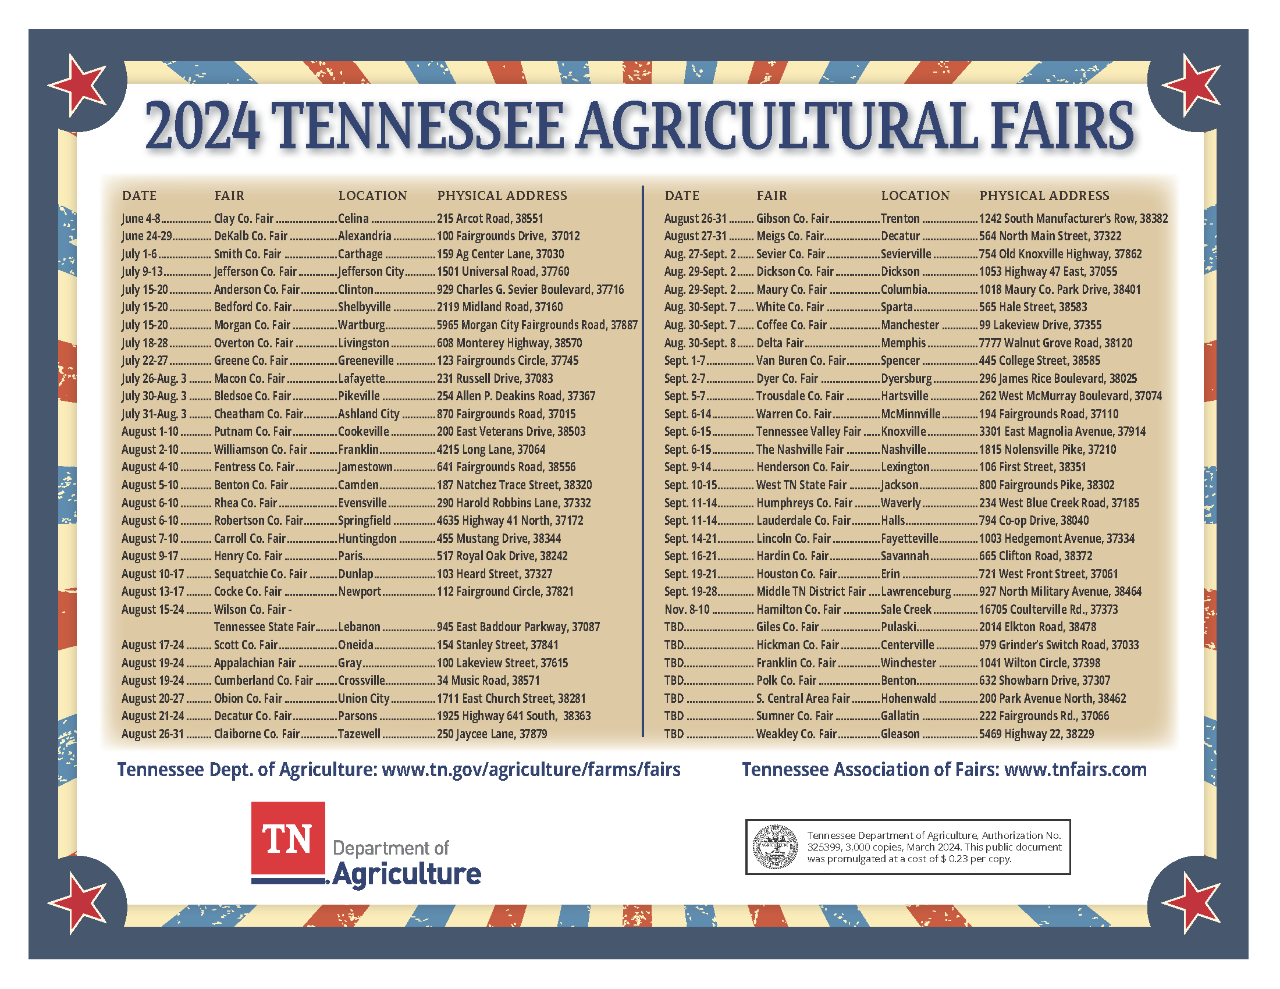 2024 Tennessee Agricultural Fair dates